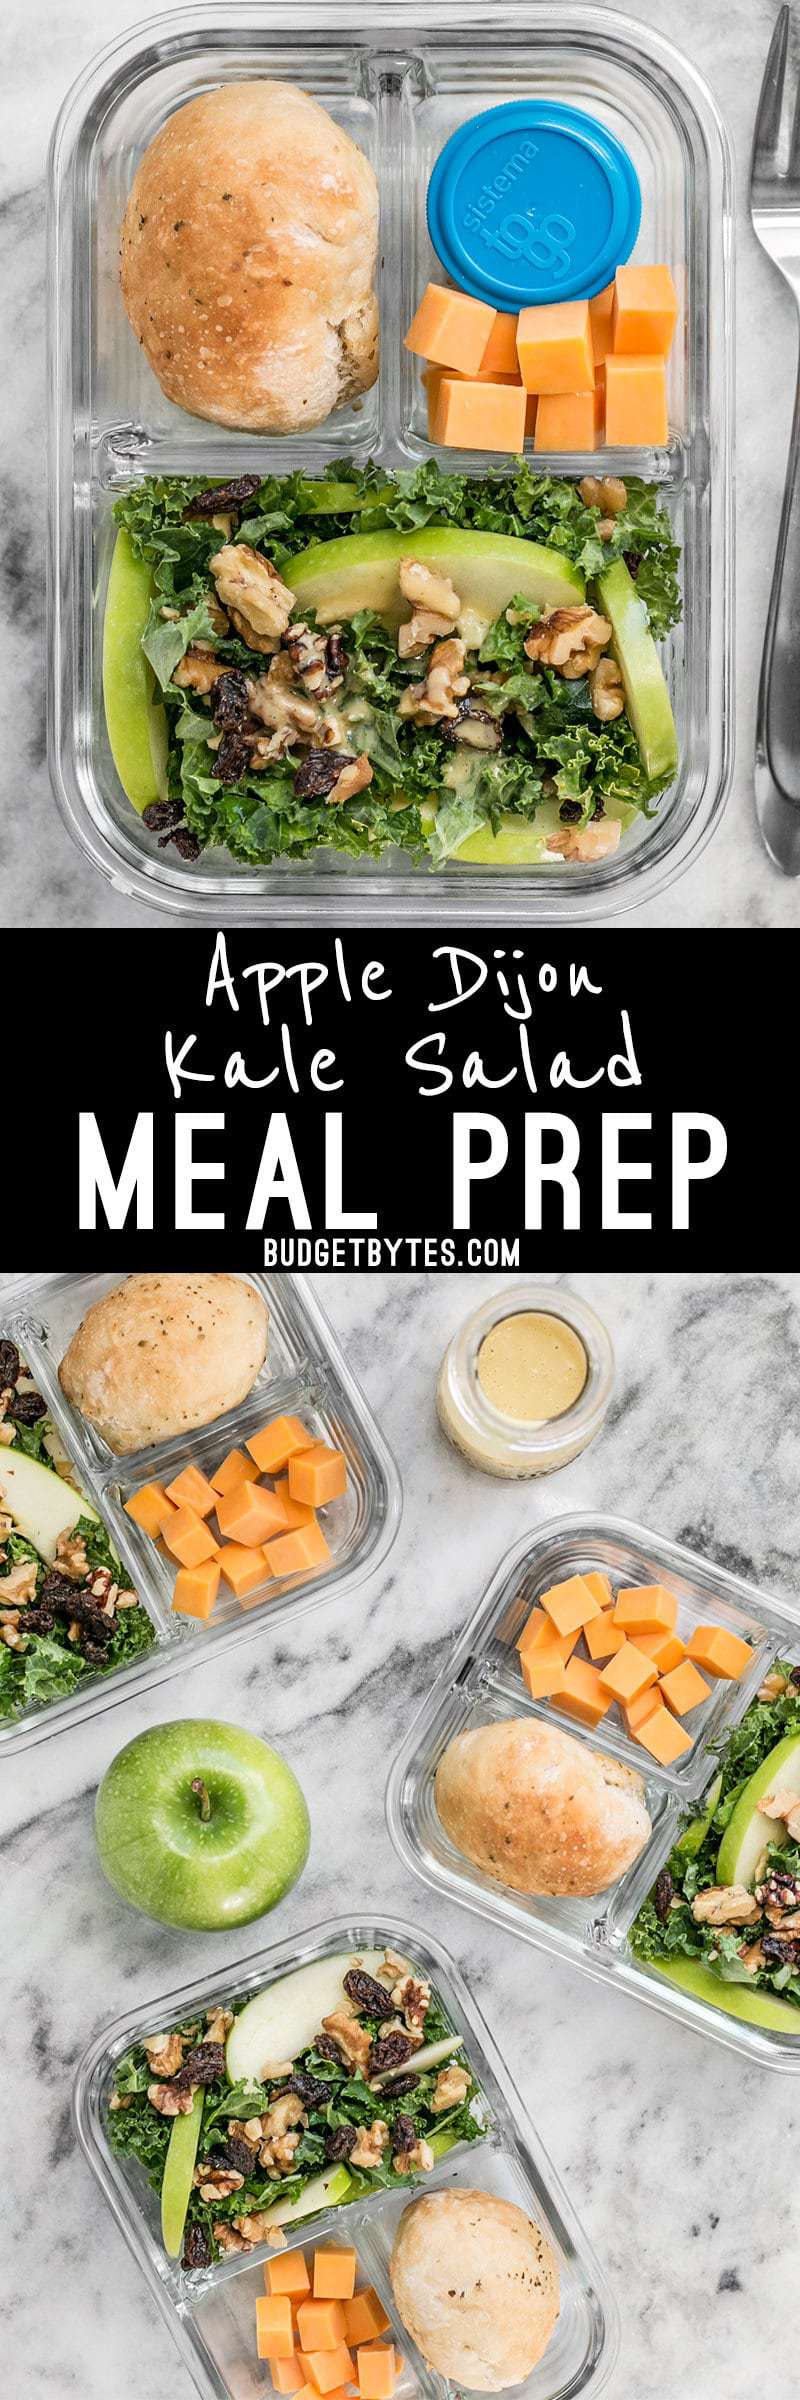 https://www.budgetbytes.com/wp-content/uploads/2017/12/Apple-Dijon-Kale-Salad-Meal-Prep-Collage.jpg